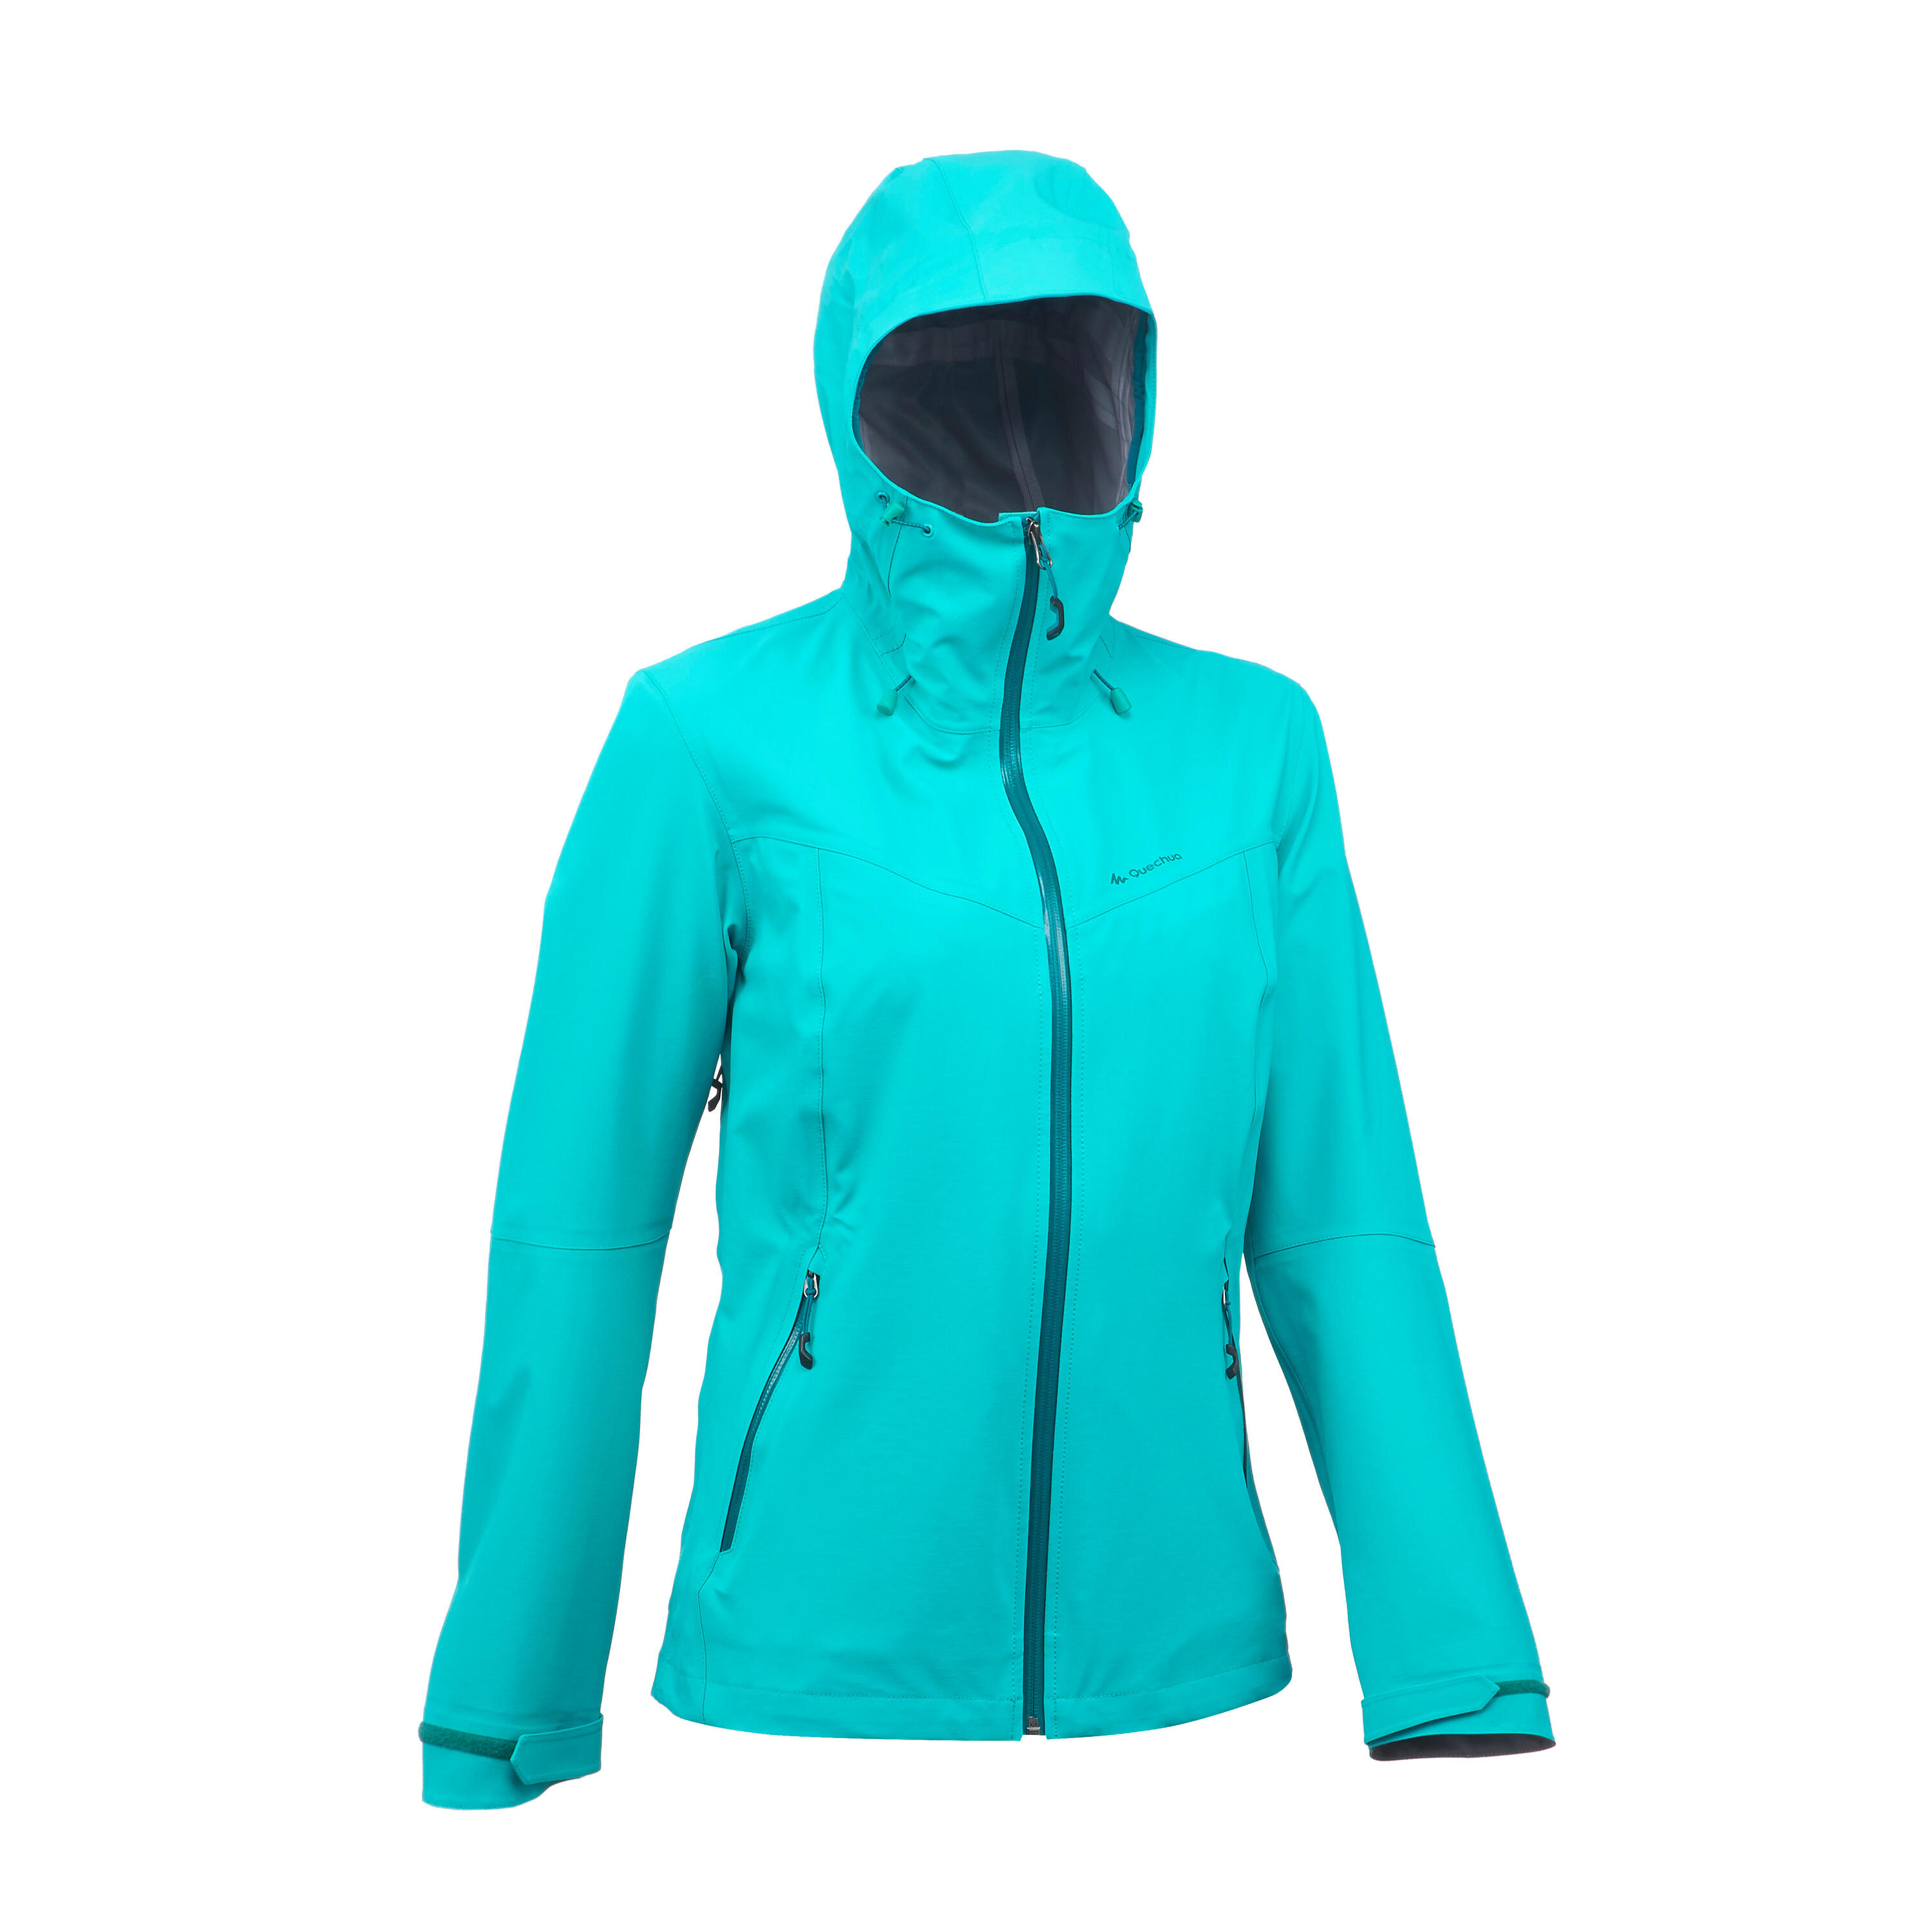 MH500 Women's Mountain Hiking Waterproof Jacket - Turquoise 2/17